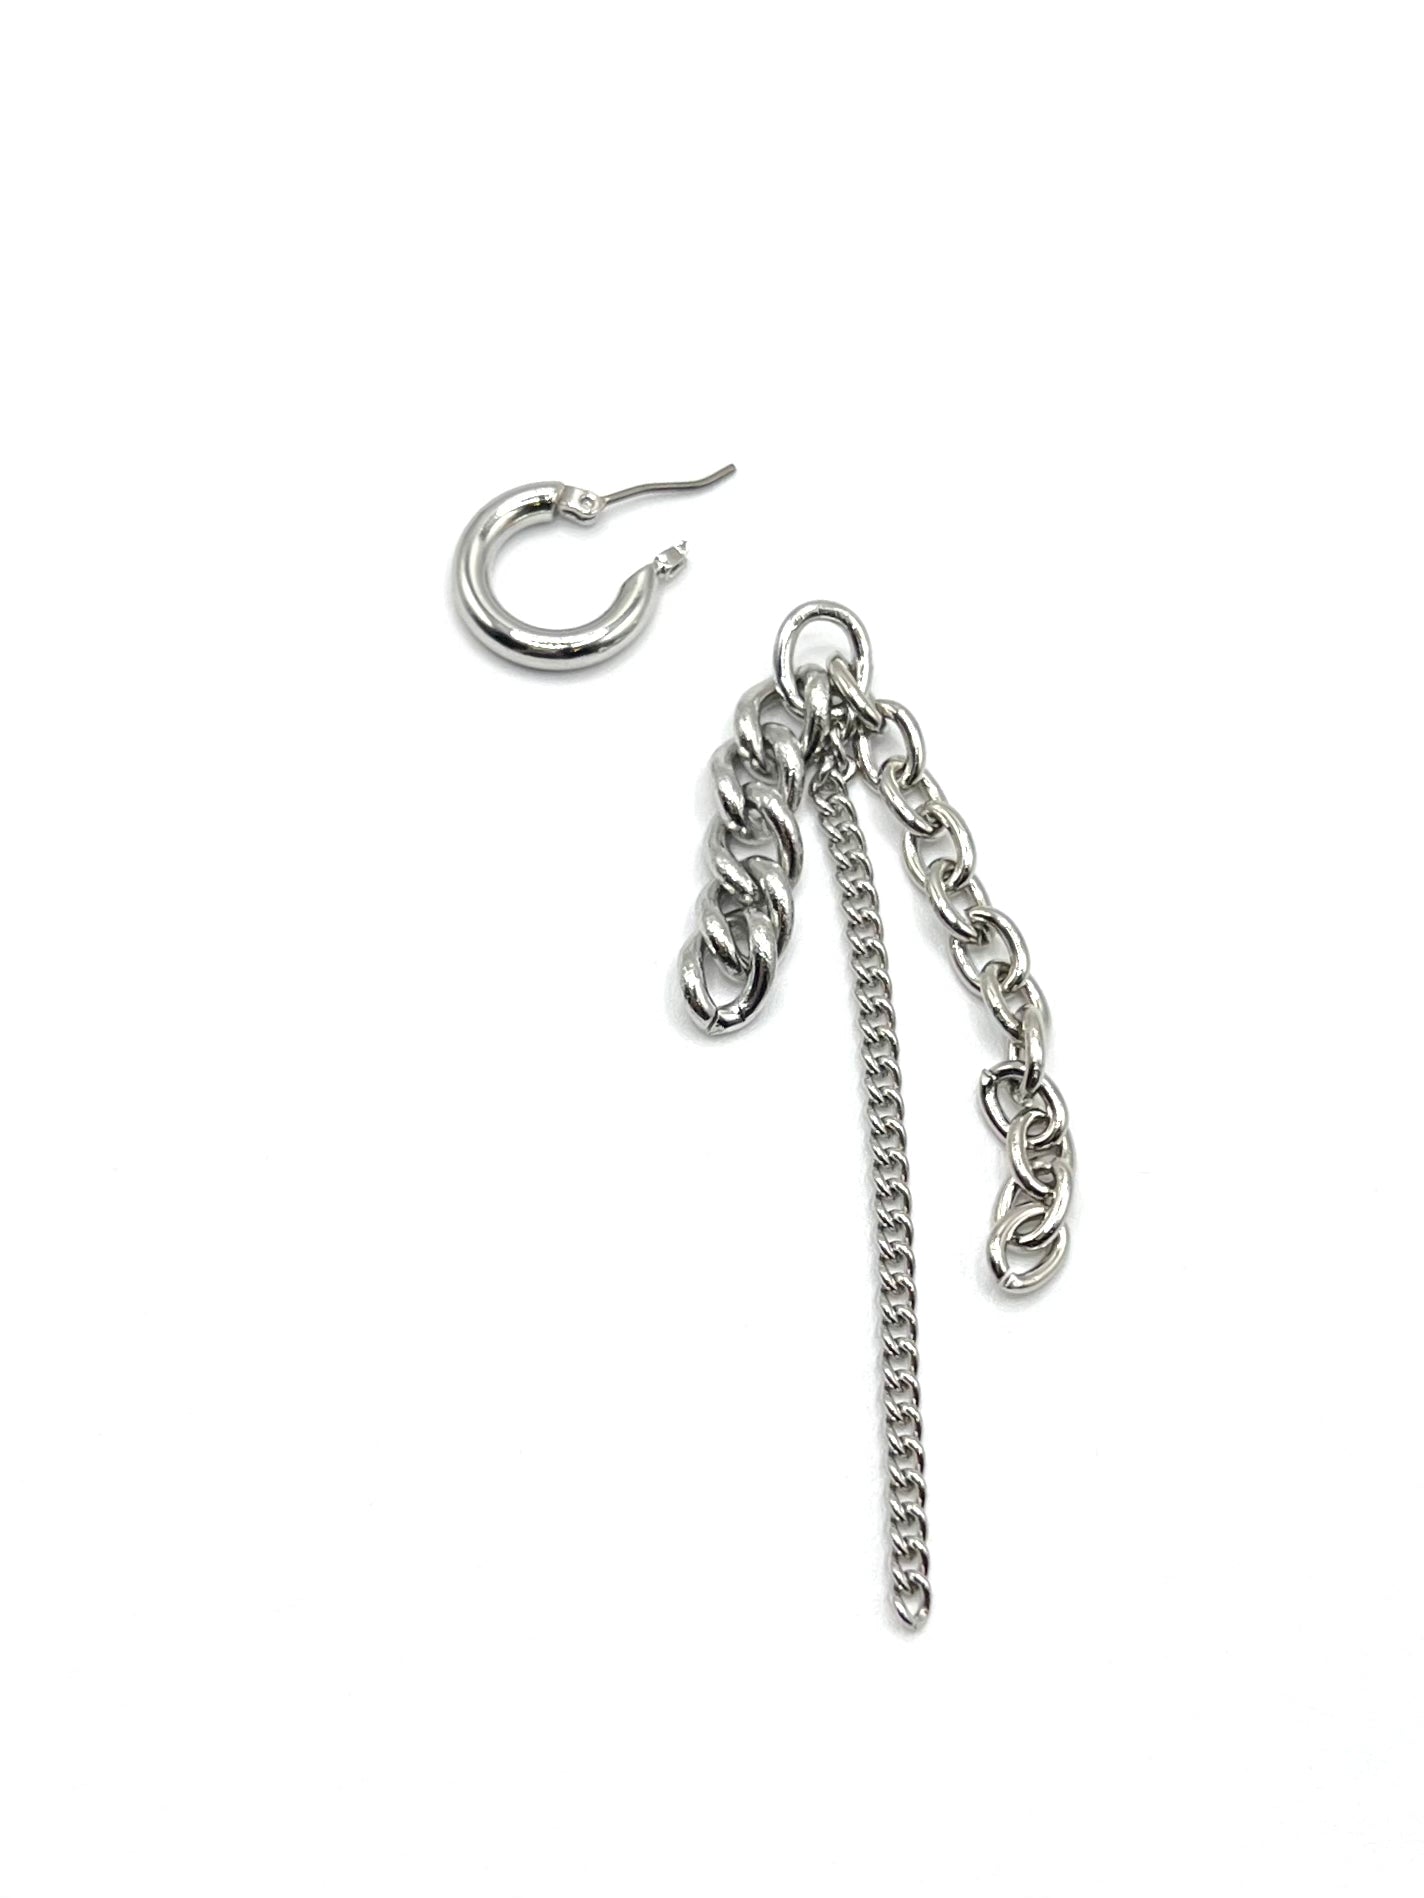 Chain combination pierce - Swing